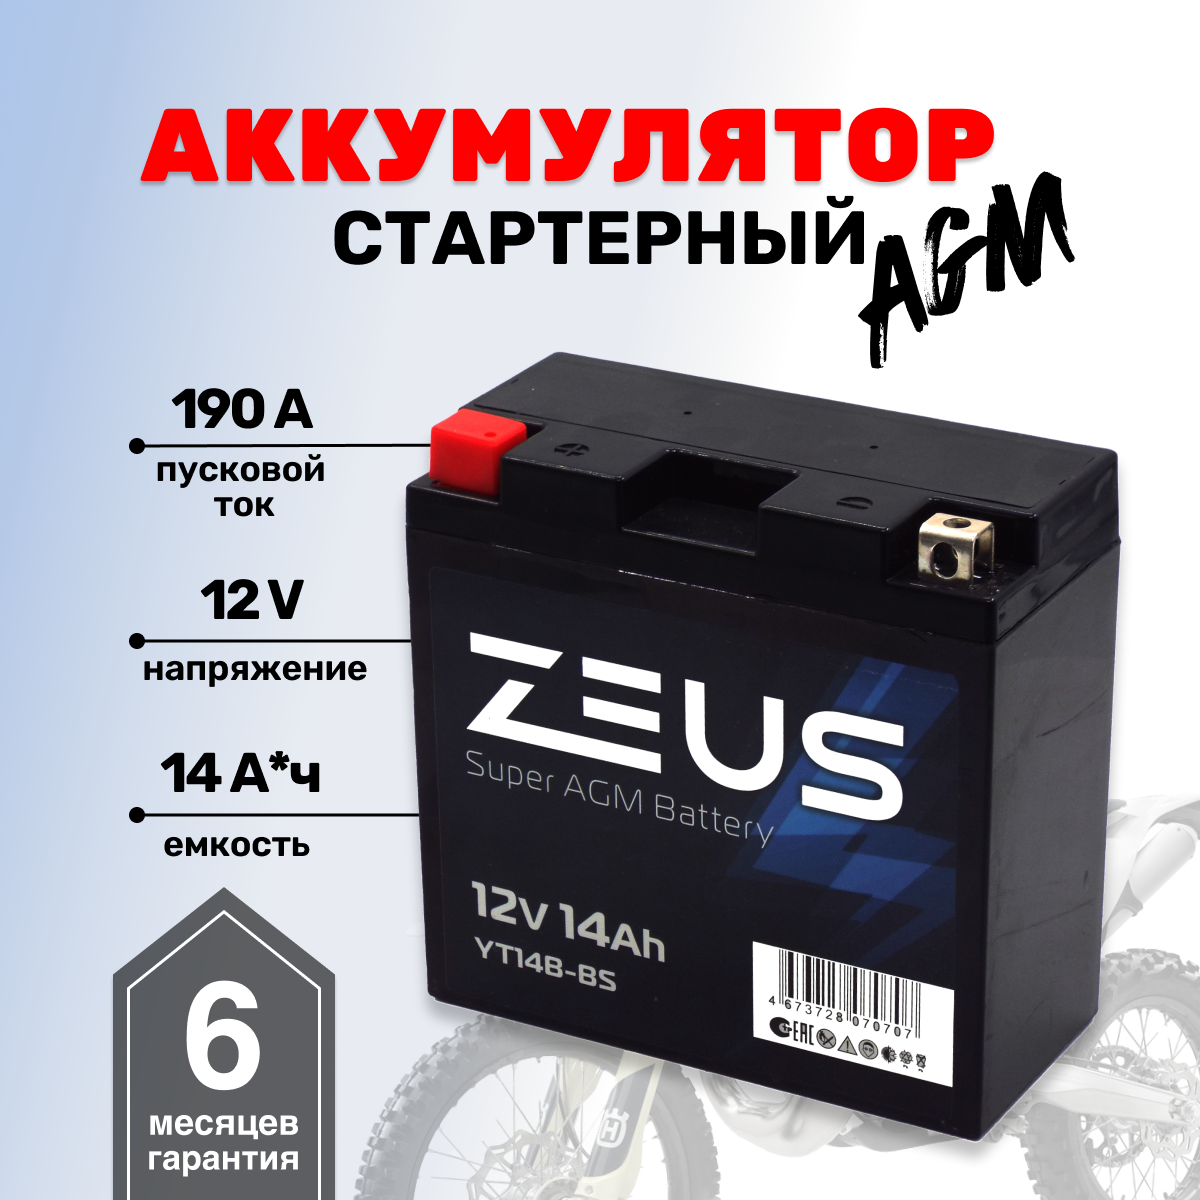 Аккумулятор стартерный для мотоцикла/квадроцикла/скутера ZEUS SUPER AGM 14 Ач п. п. (YT14B-BS)